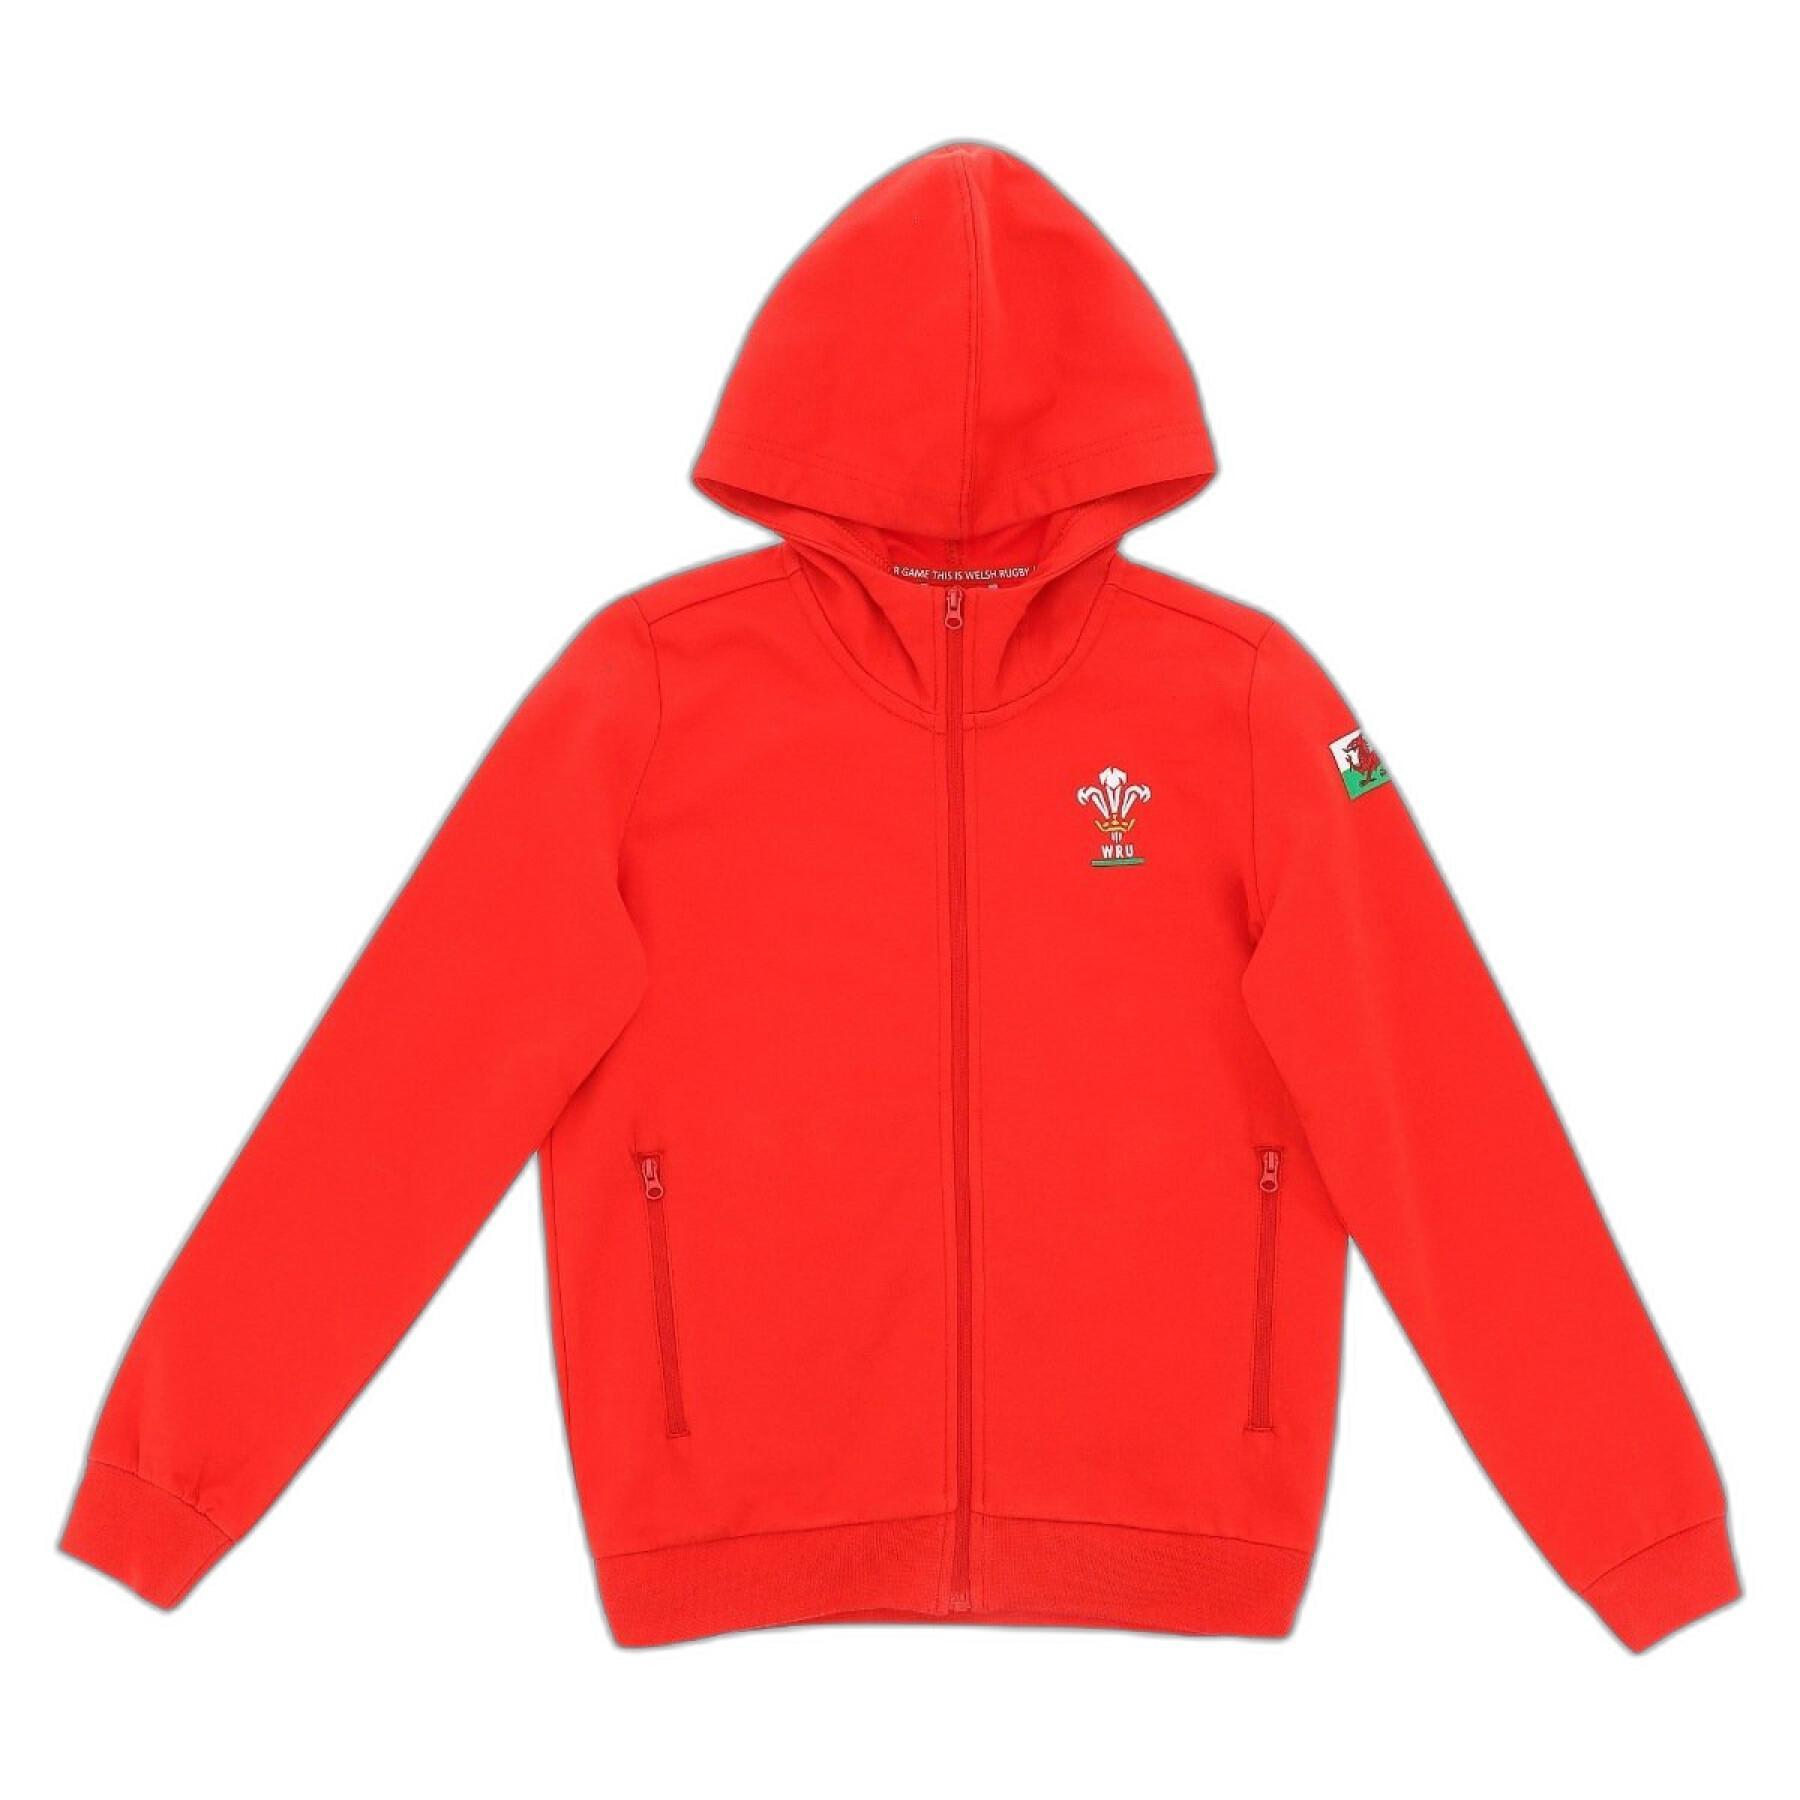 Full zip hoodie for kids Pays de Galles Rugby XV Merch CA LF